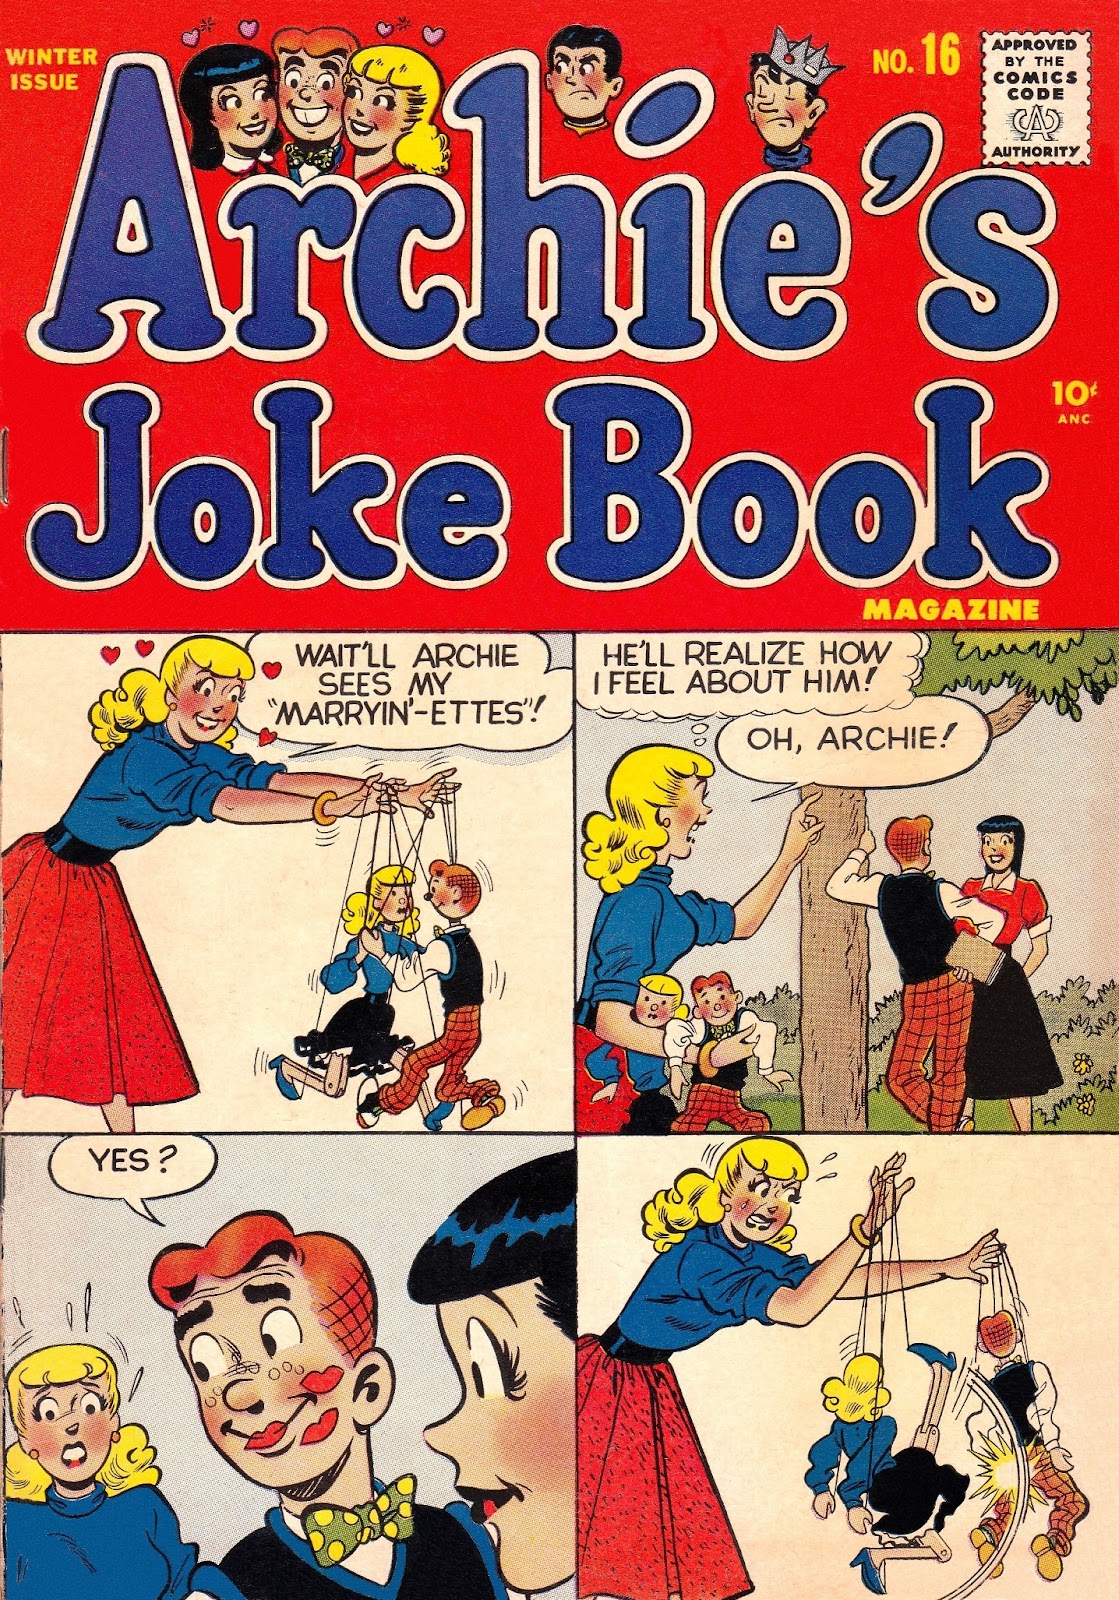 Archie's Joke Book Magazine issue 16 - Page 1